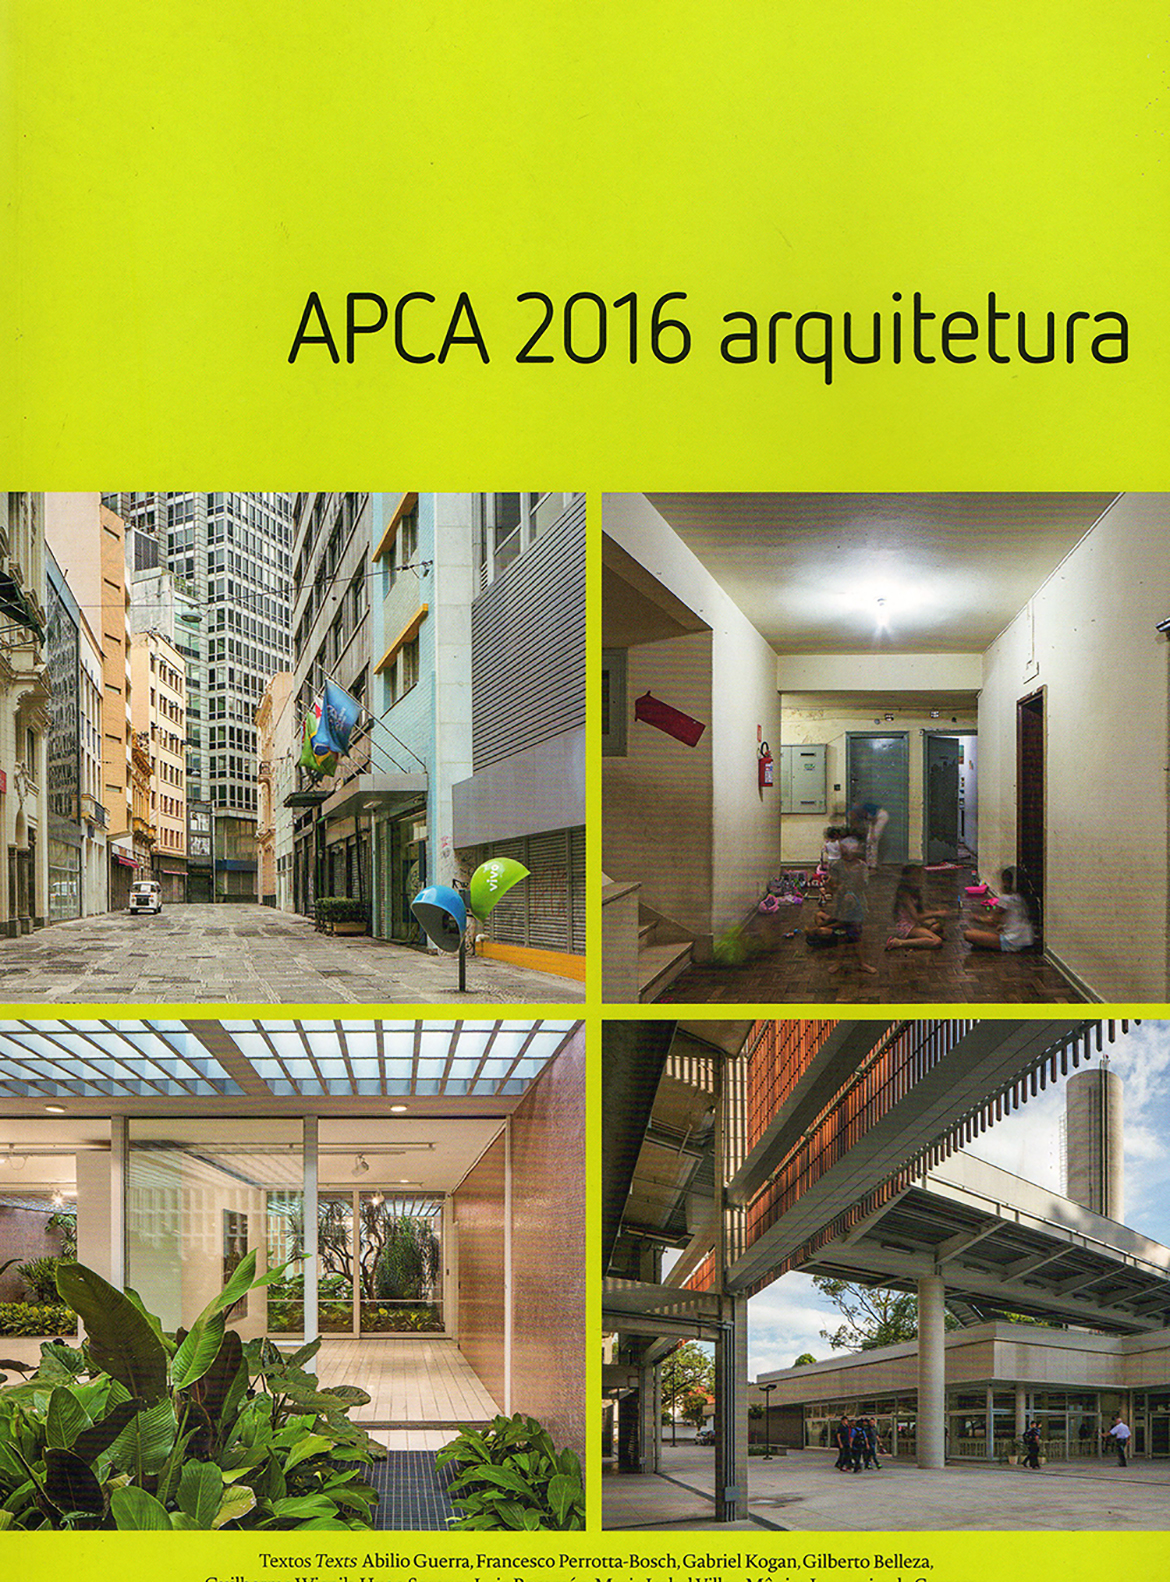 APCA 2016 Arquitetura